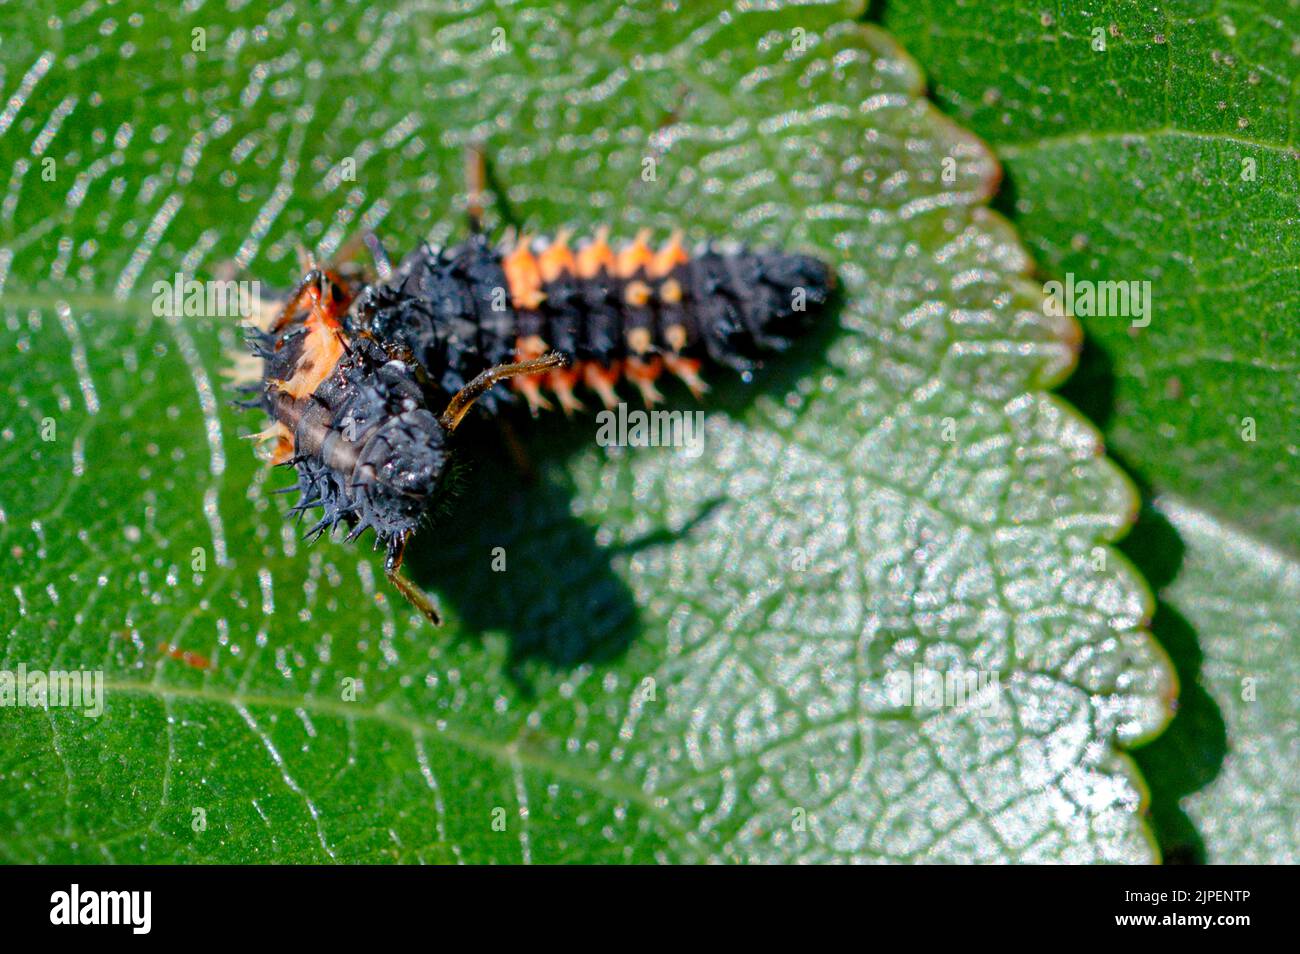 Cannibalism with the larva of a Harlequin ladybug beetle, Harmonia axyridis, eating a larva of the same species Stock Photo